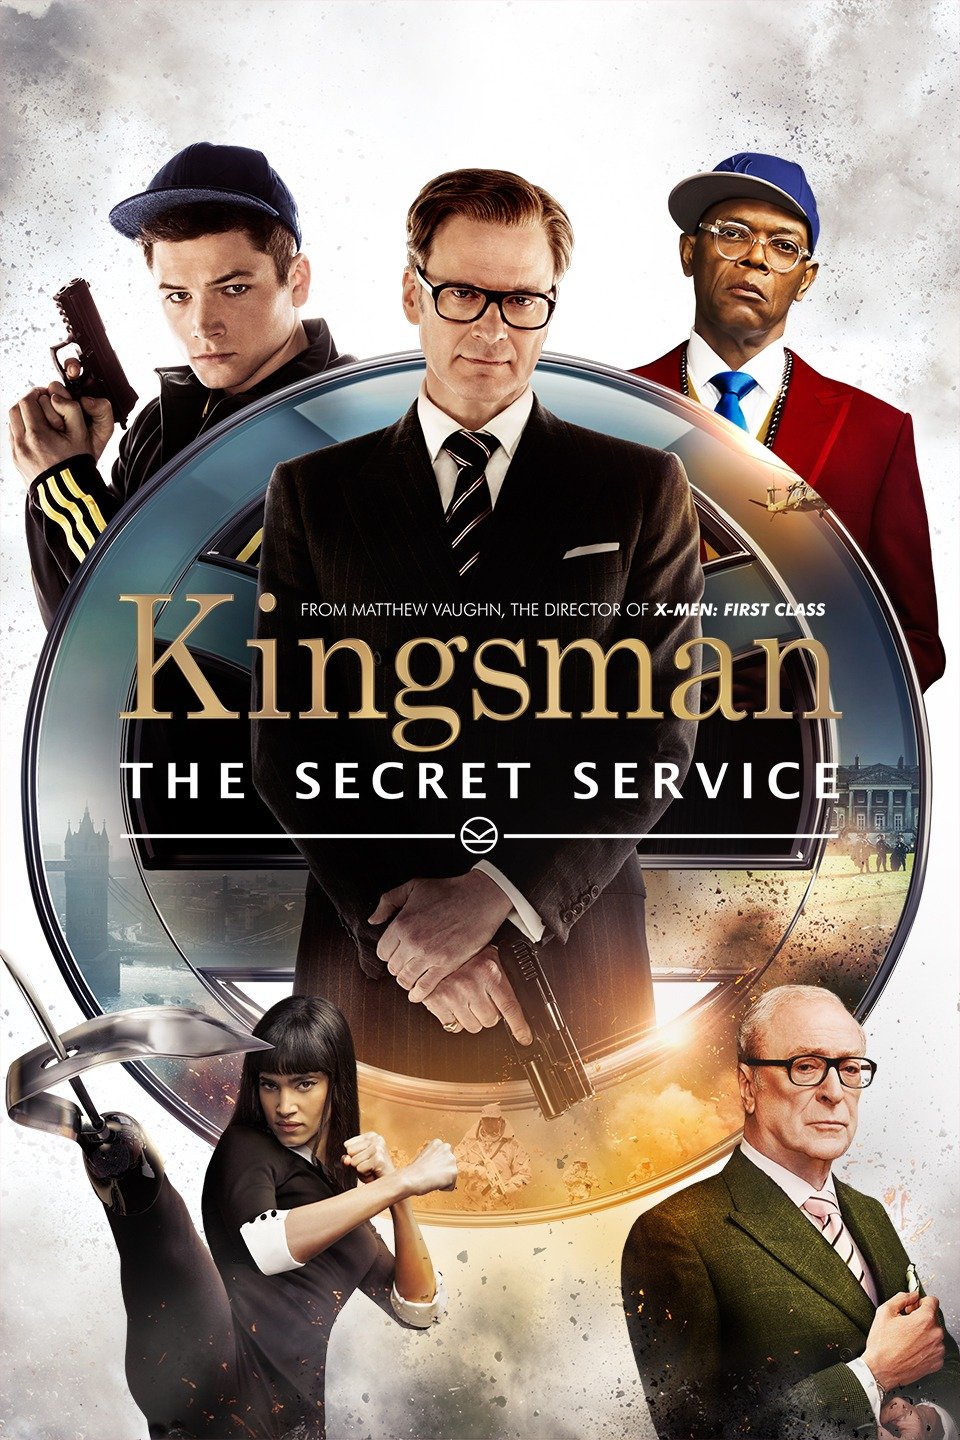 [MINI-HD] Kingsman The Secret Service (2014) คิงส์แมน โคตรพิทักษ์บ่มพยัคฆ์ [MASTER] [1080P] [พากย์ไทย AC3 5.1+อังกฤษ DTS 5.1] [Sub Thai+Eng] [ONE2UP]